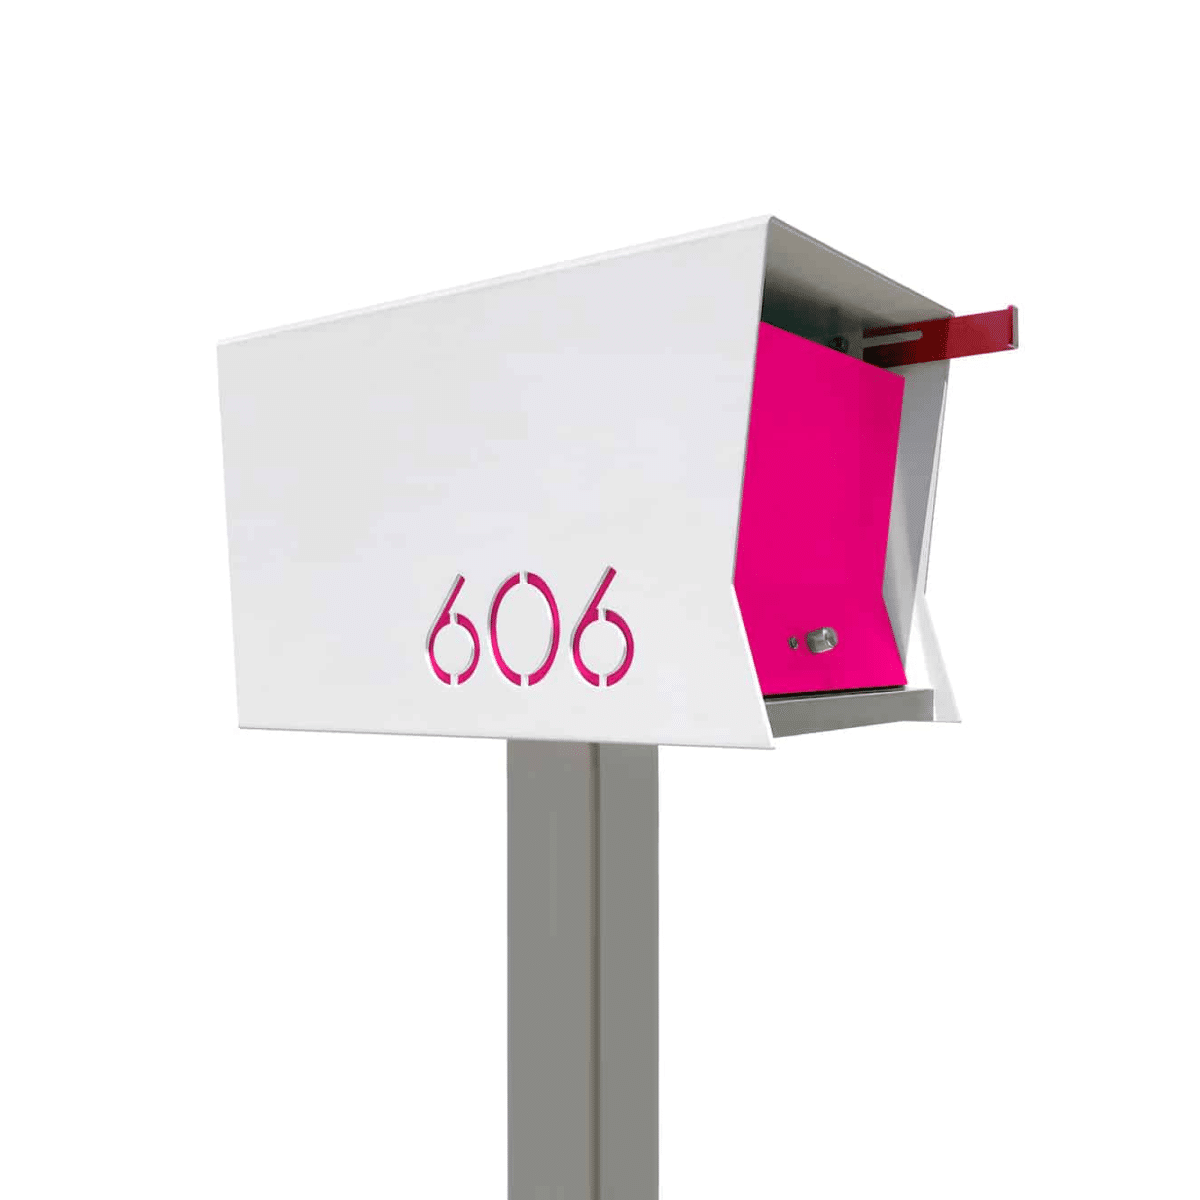 The Original Retrobox in Arctic White – Modern Mailbox